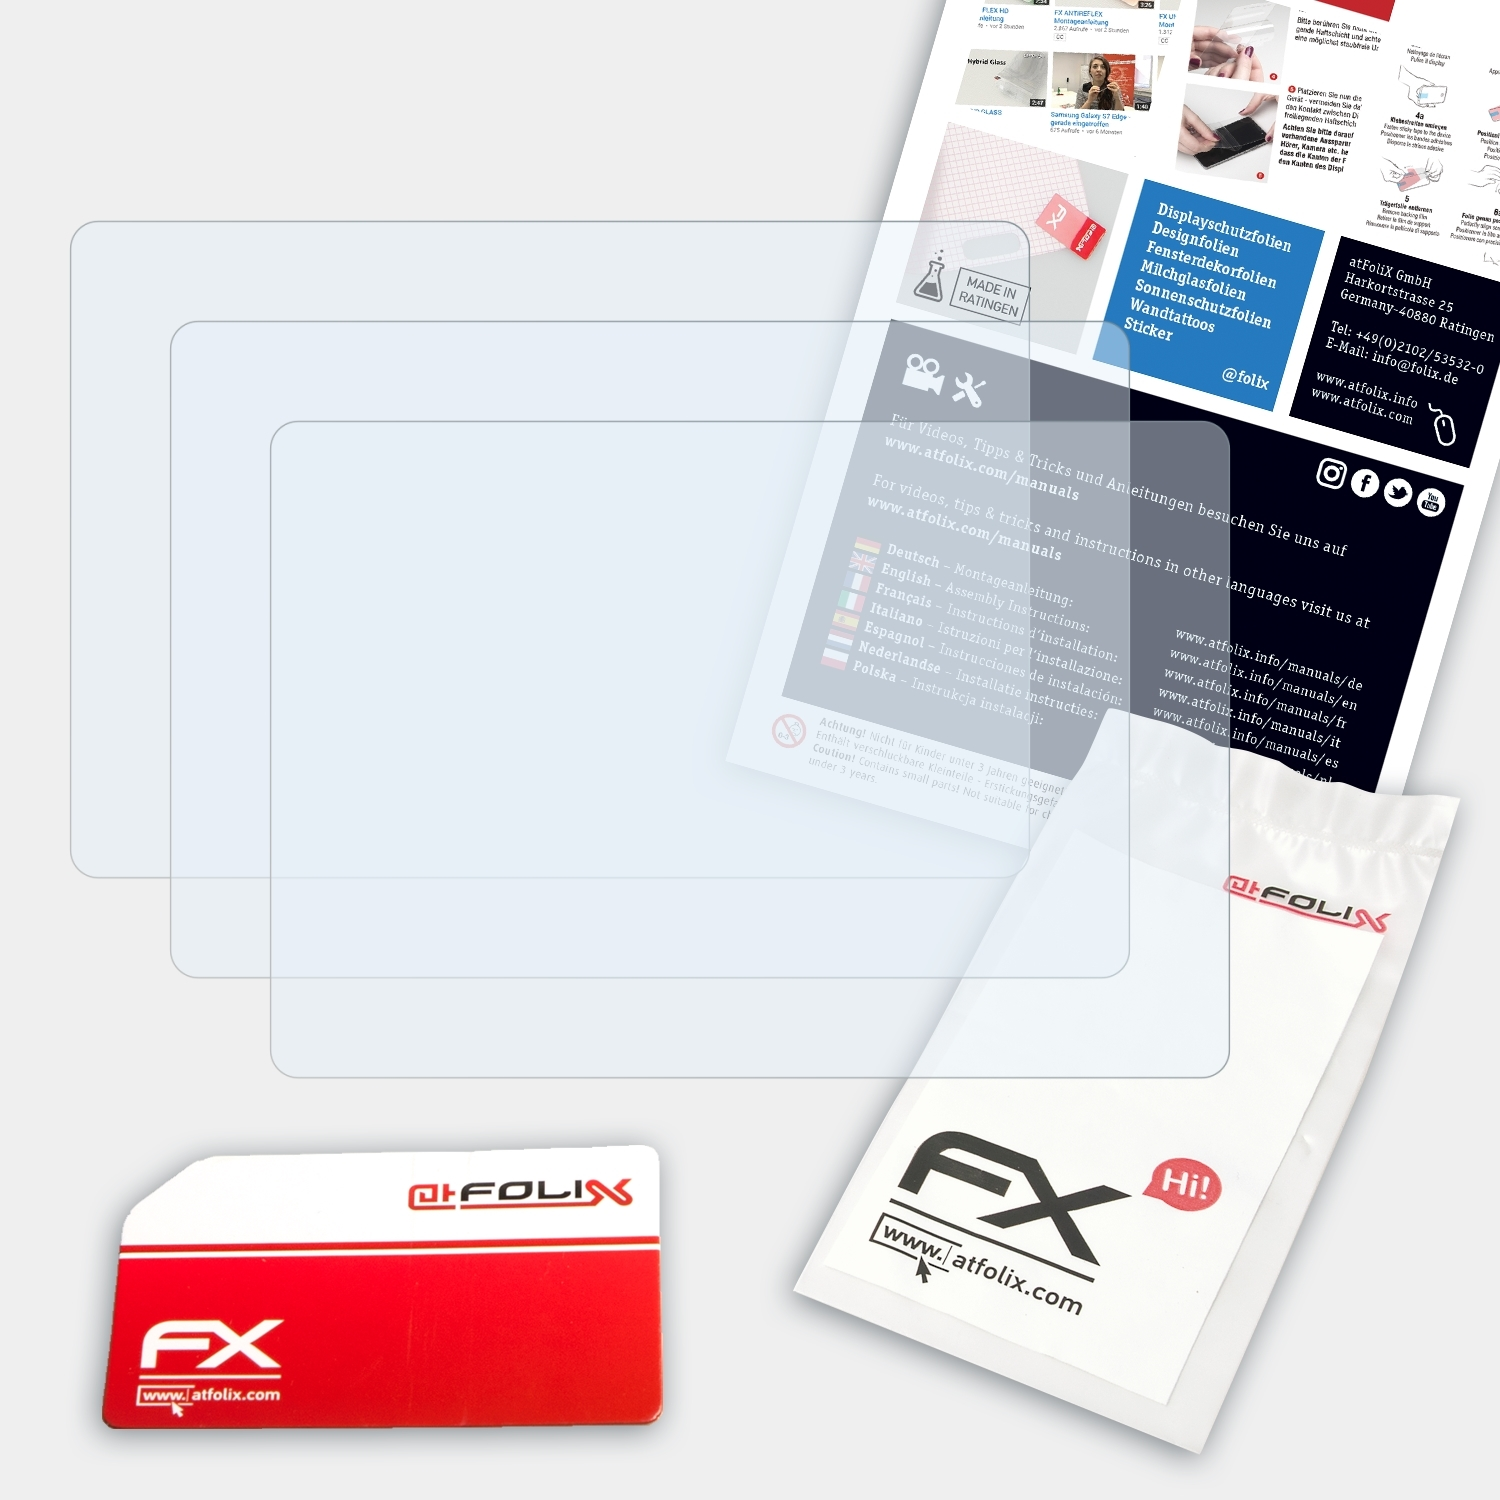 ATFOLIX 3x FX-Clear Displayschutz(für Pentax Ricoh K-S1)